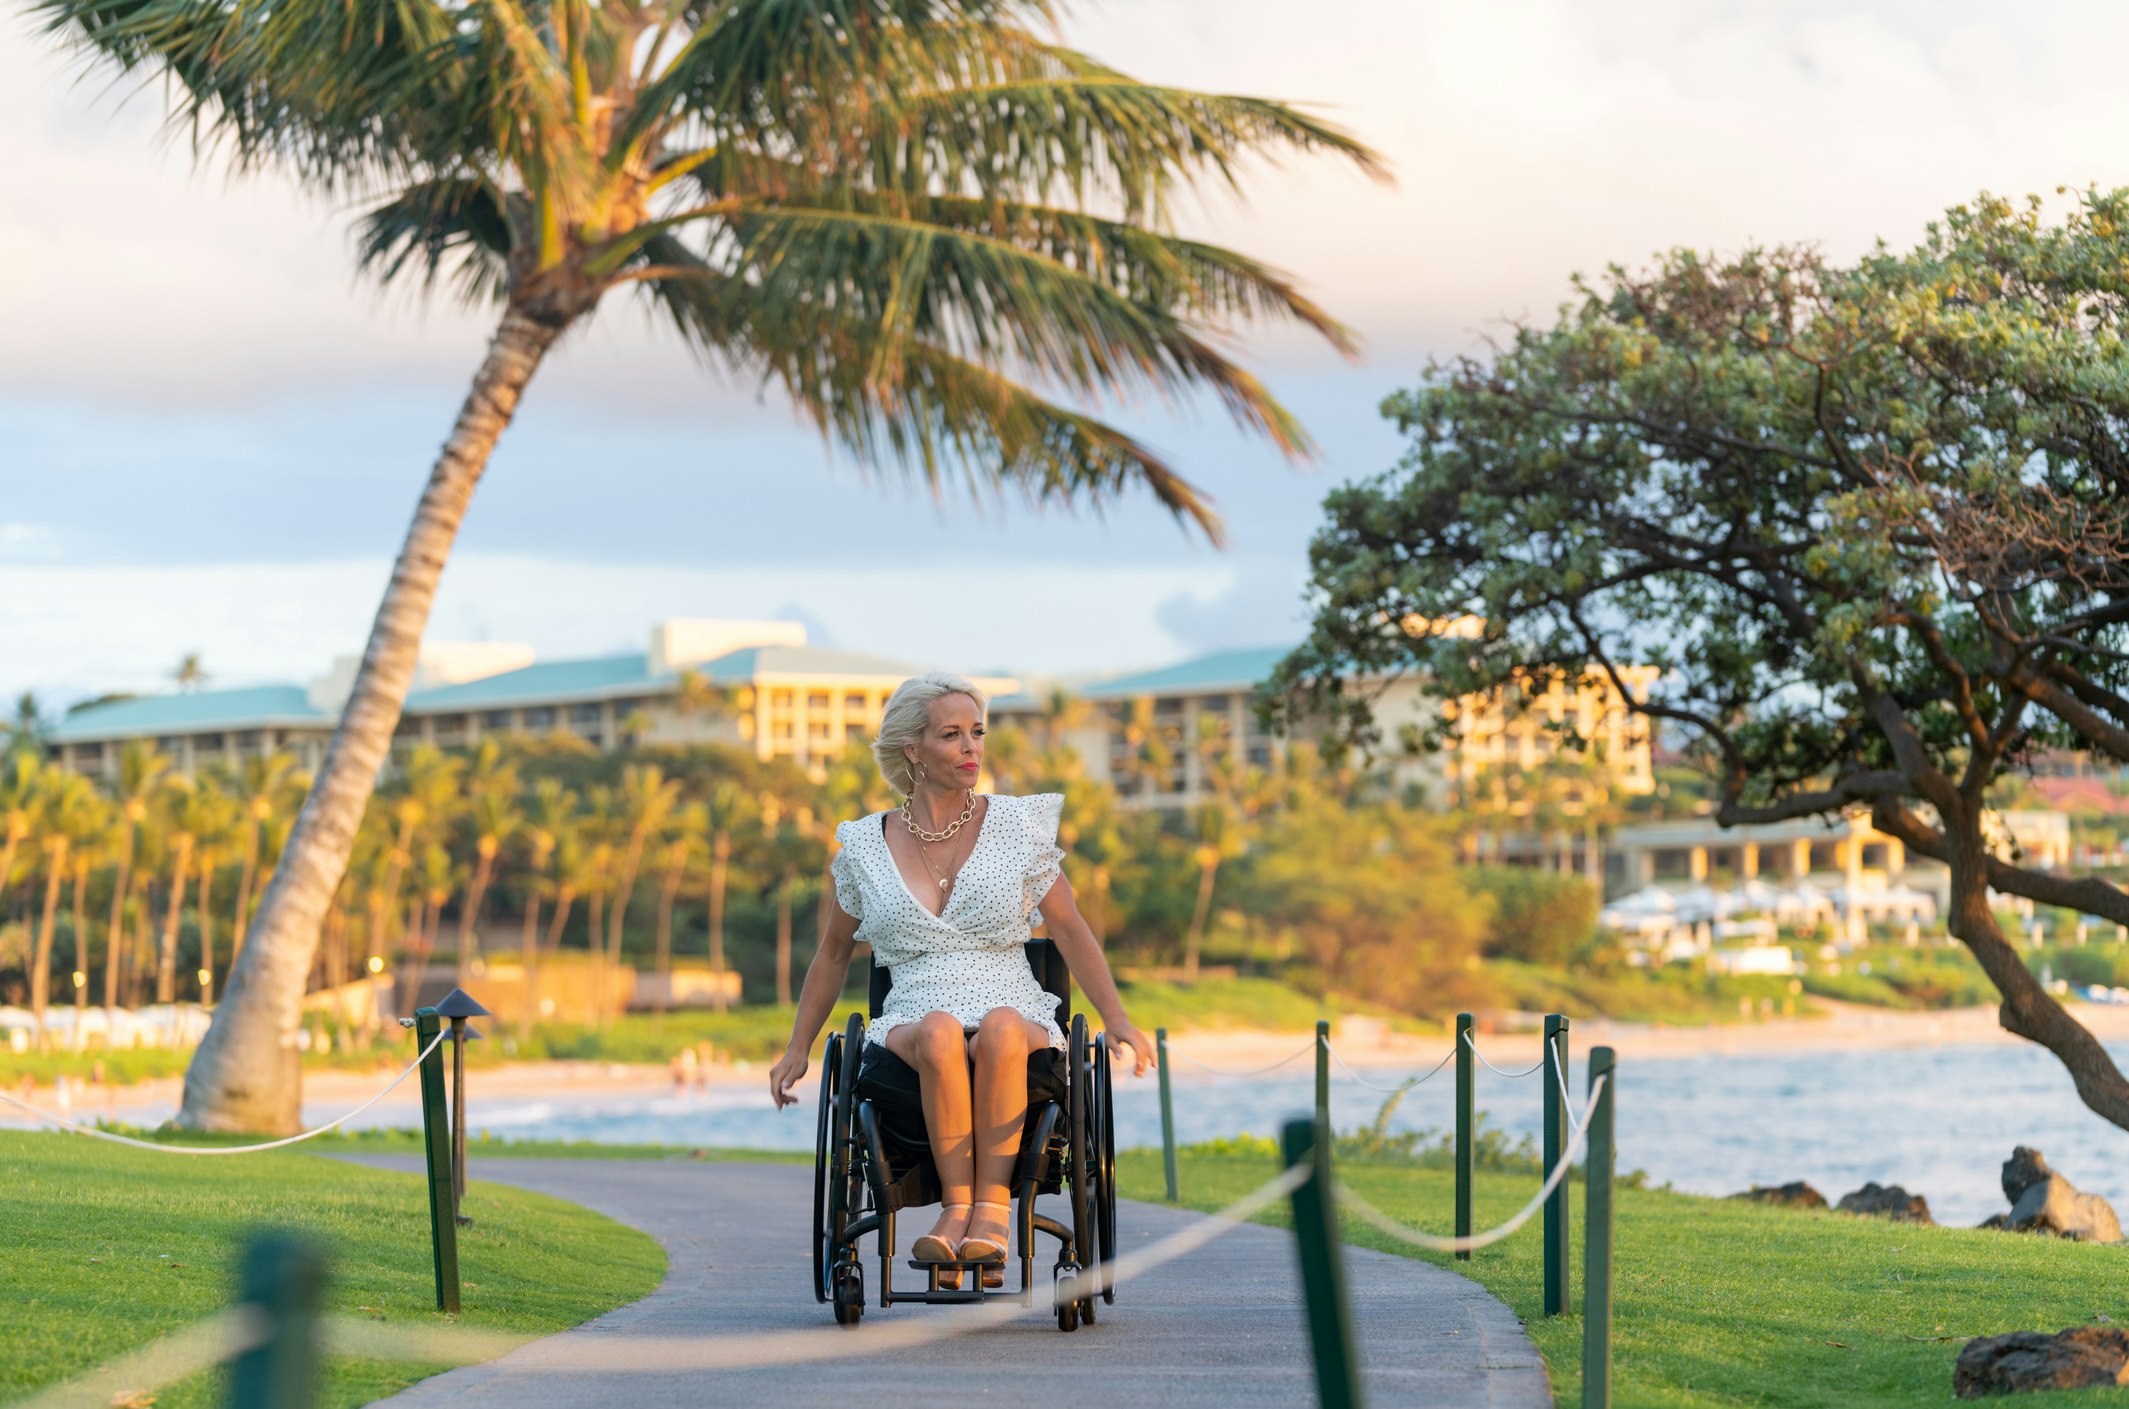 A white woman in a white dress wheels her wheelchair along a boardwalk in a tropical destination